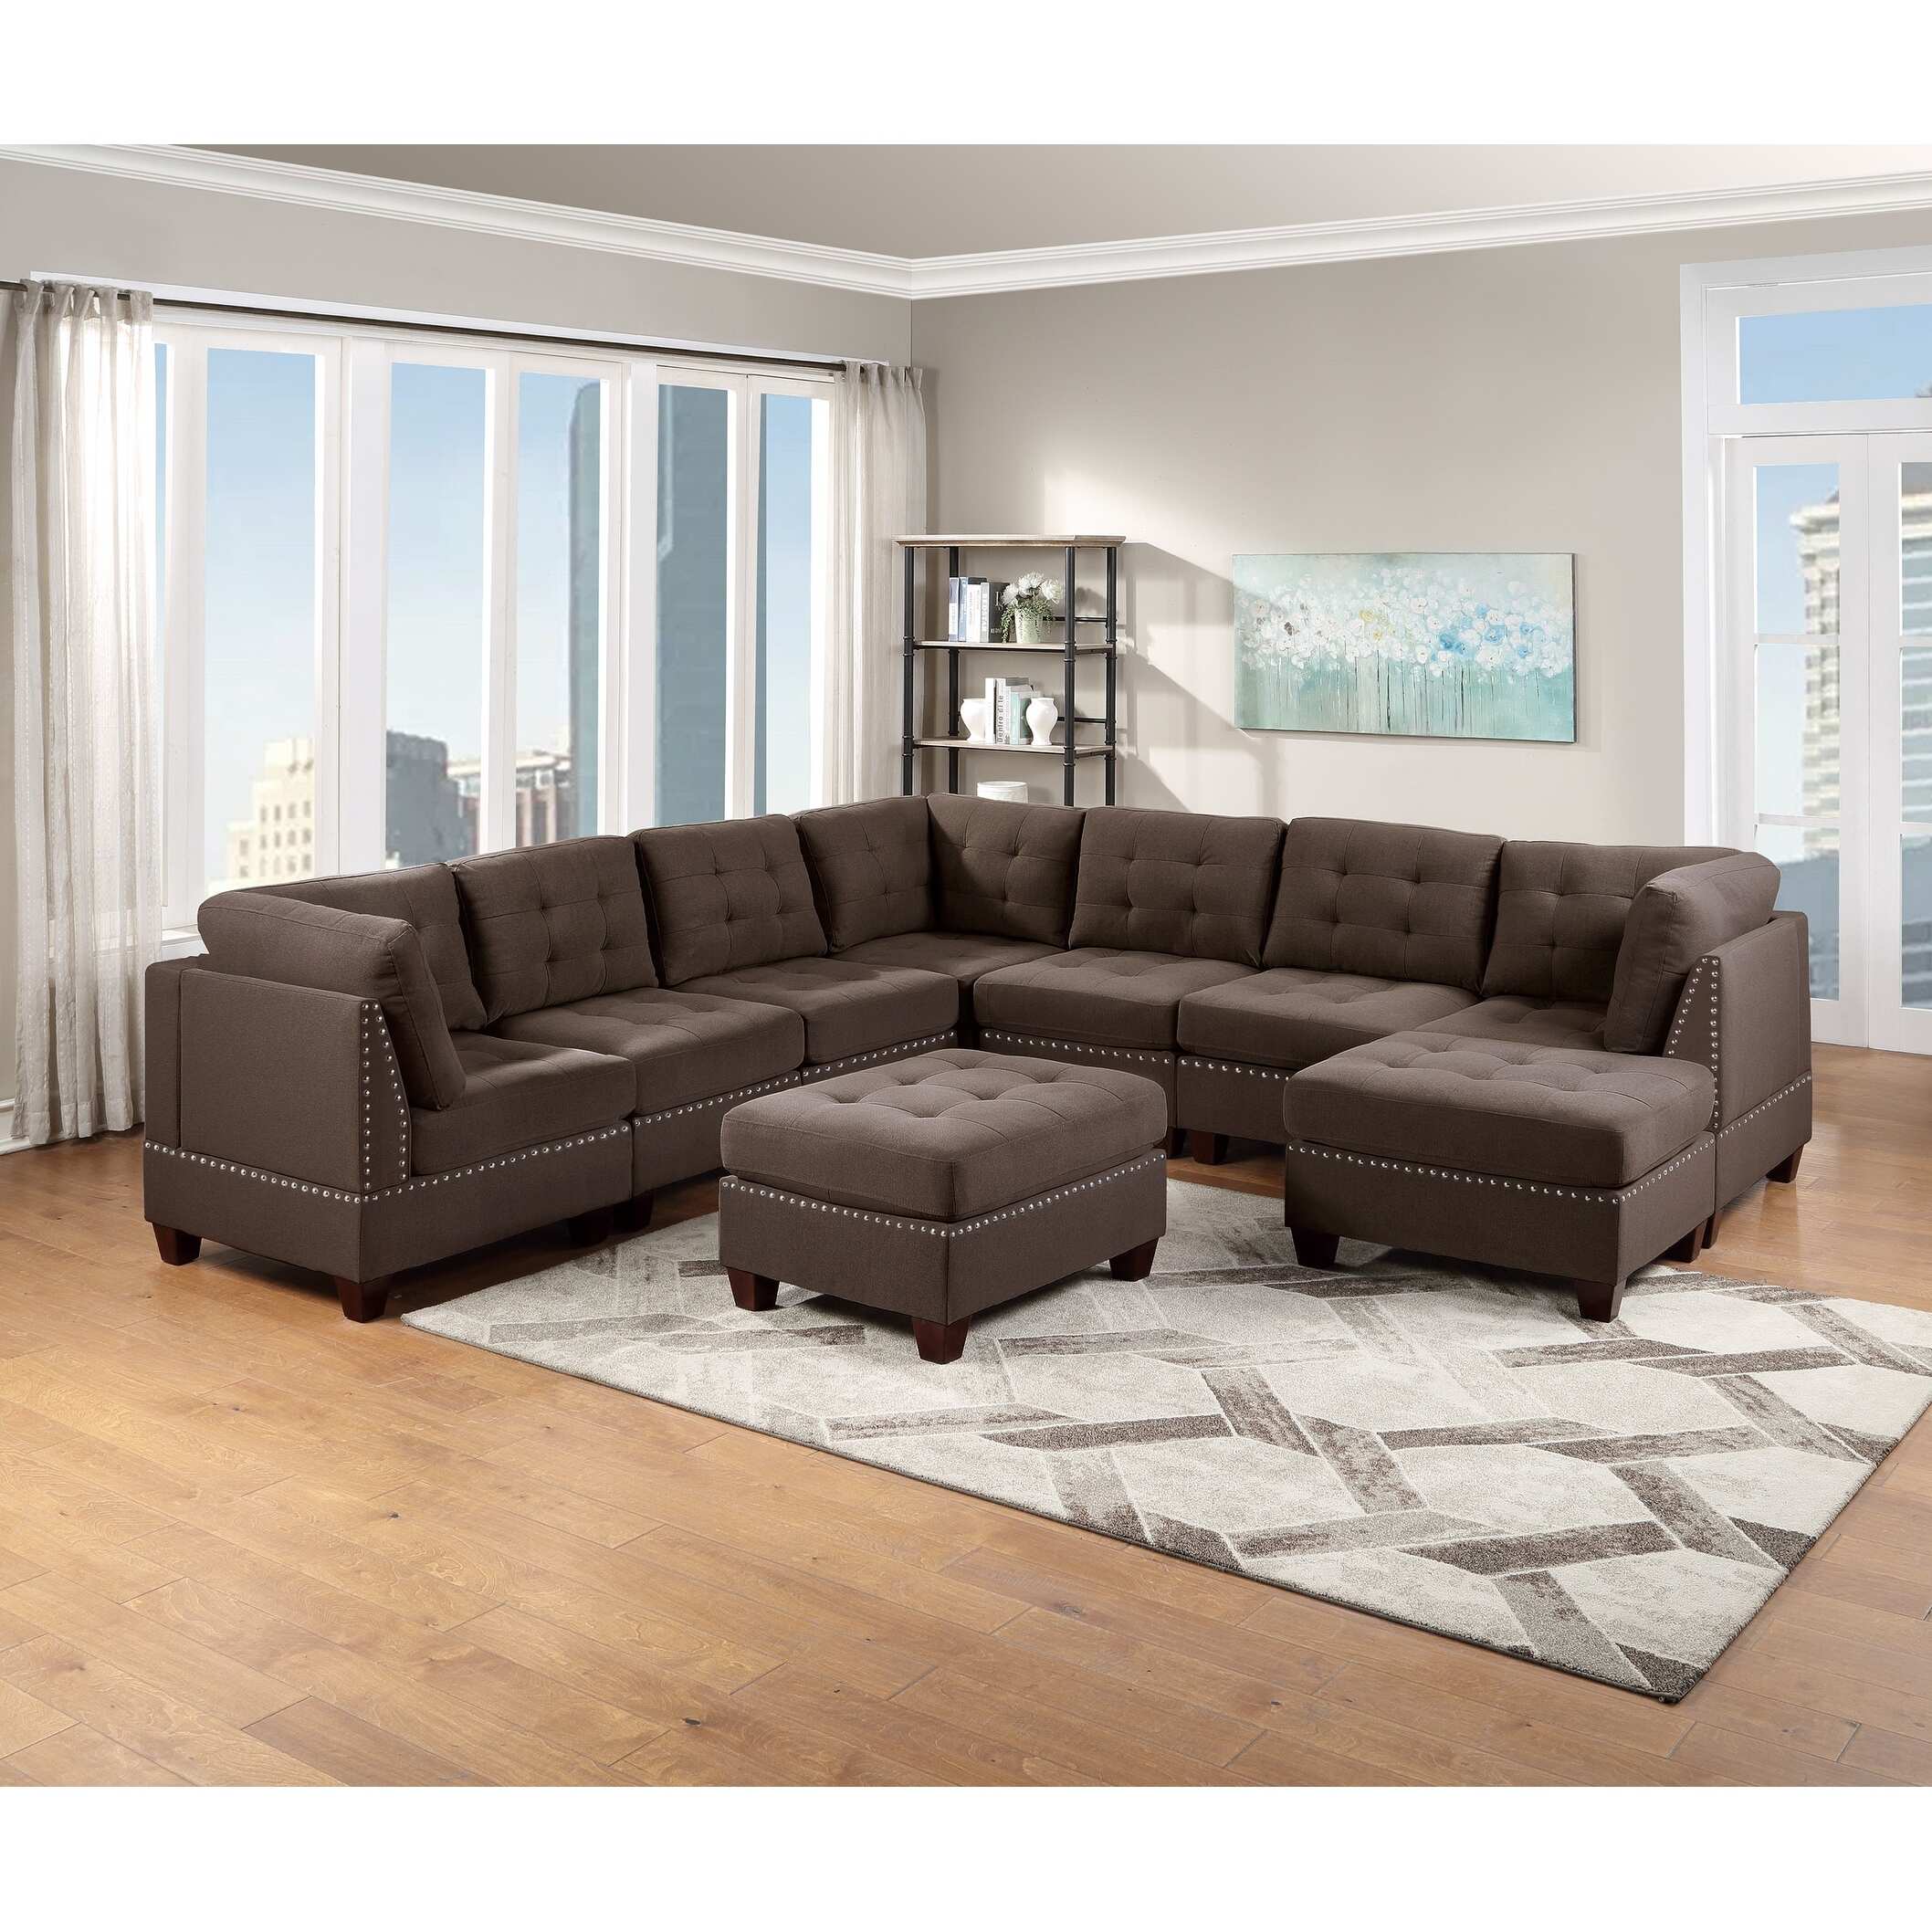 Living Room Furniture Tufted Ottoman Black Coffee Linen Like Fabric 1Pc Ottoman Cushion Nail Heads Wooden Legs